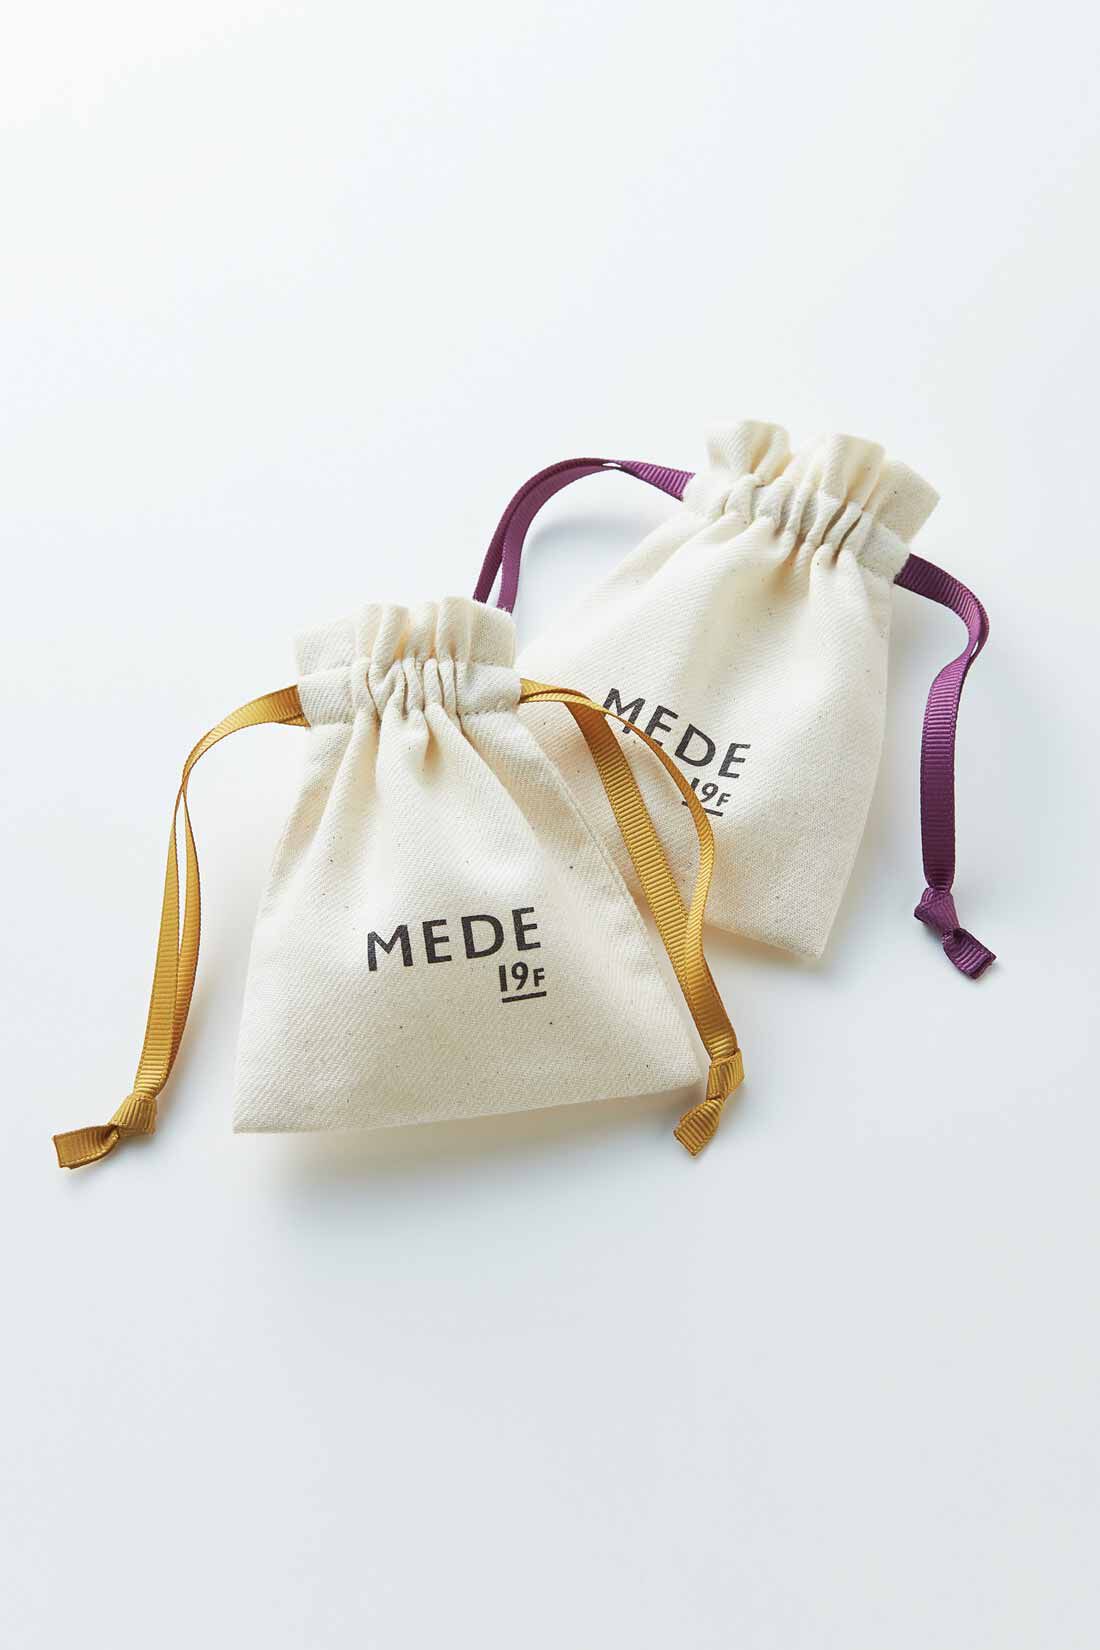 MEDE19F|YPAC for MEDE19F　フランス製陶器ボタンイヤリング type.08|MEDE19Fオリジナルきんちゃくに入れてお届けします。